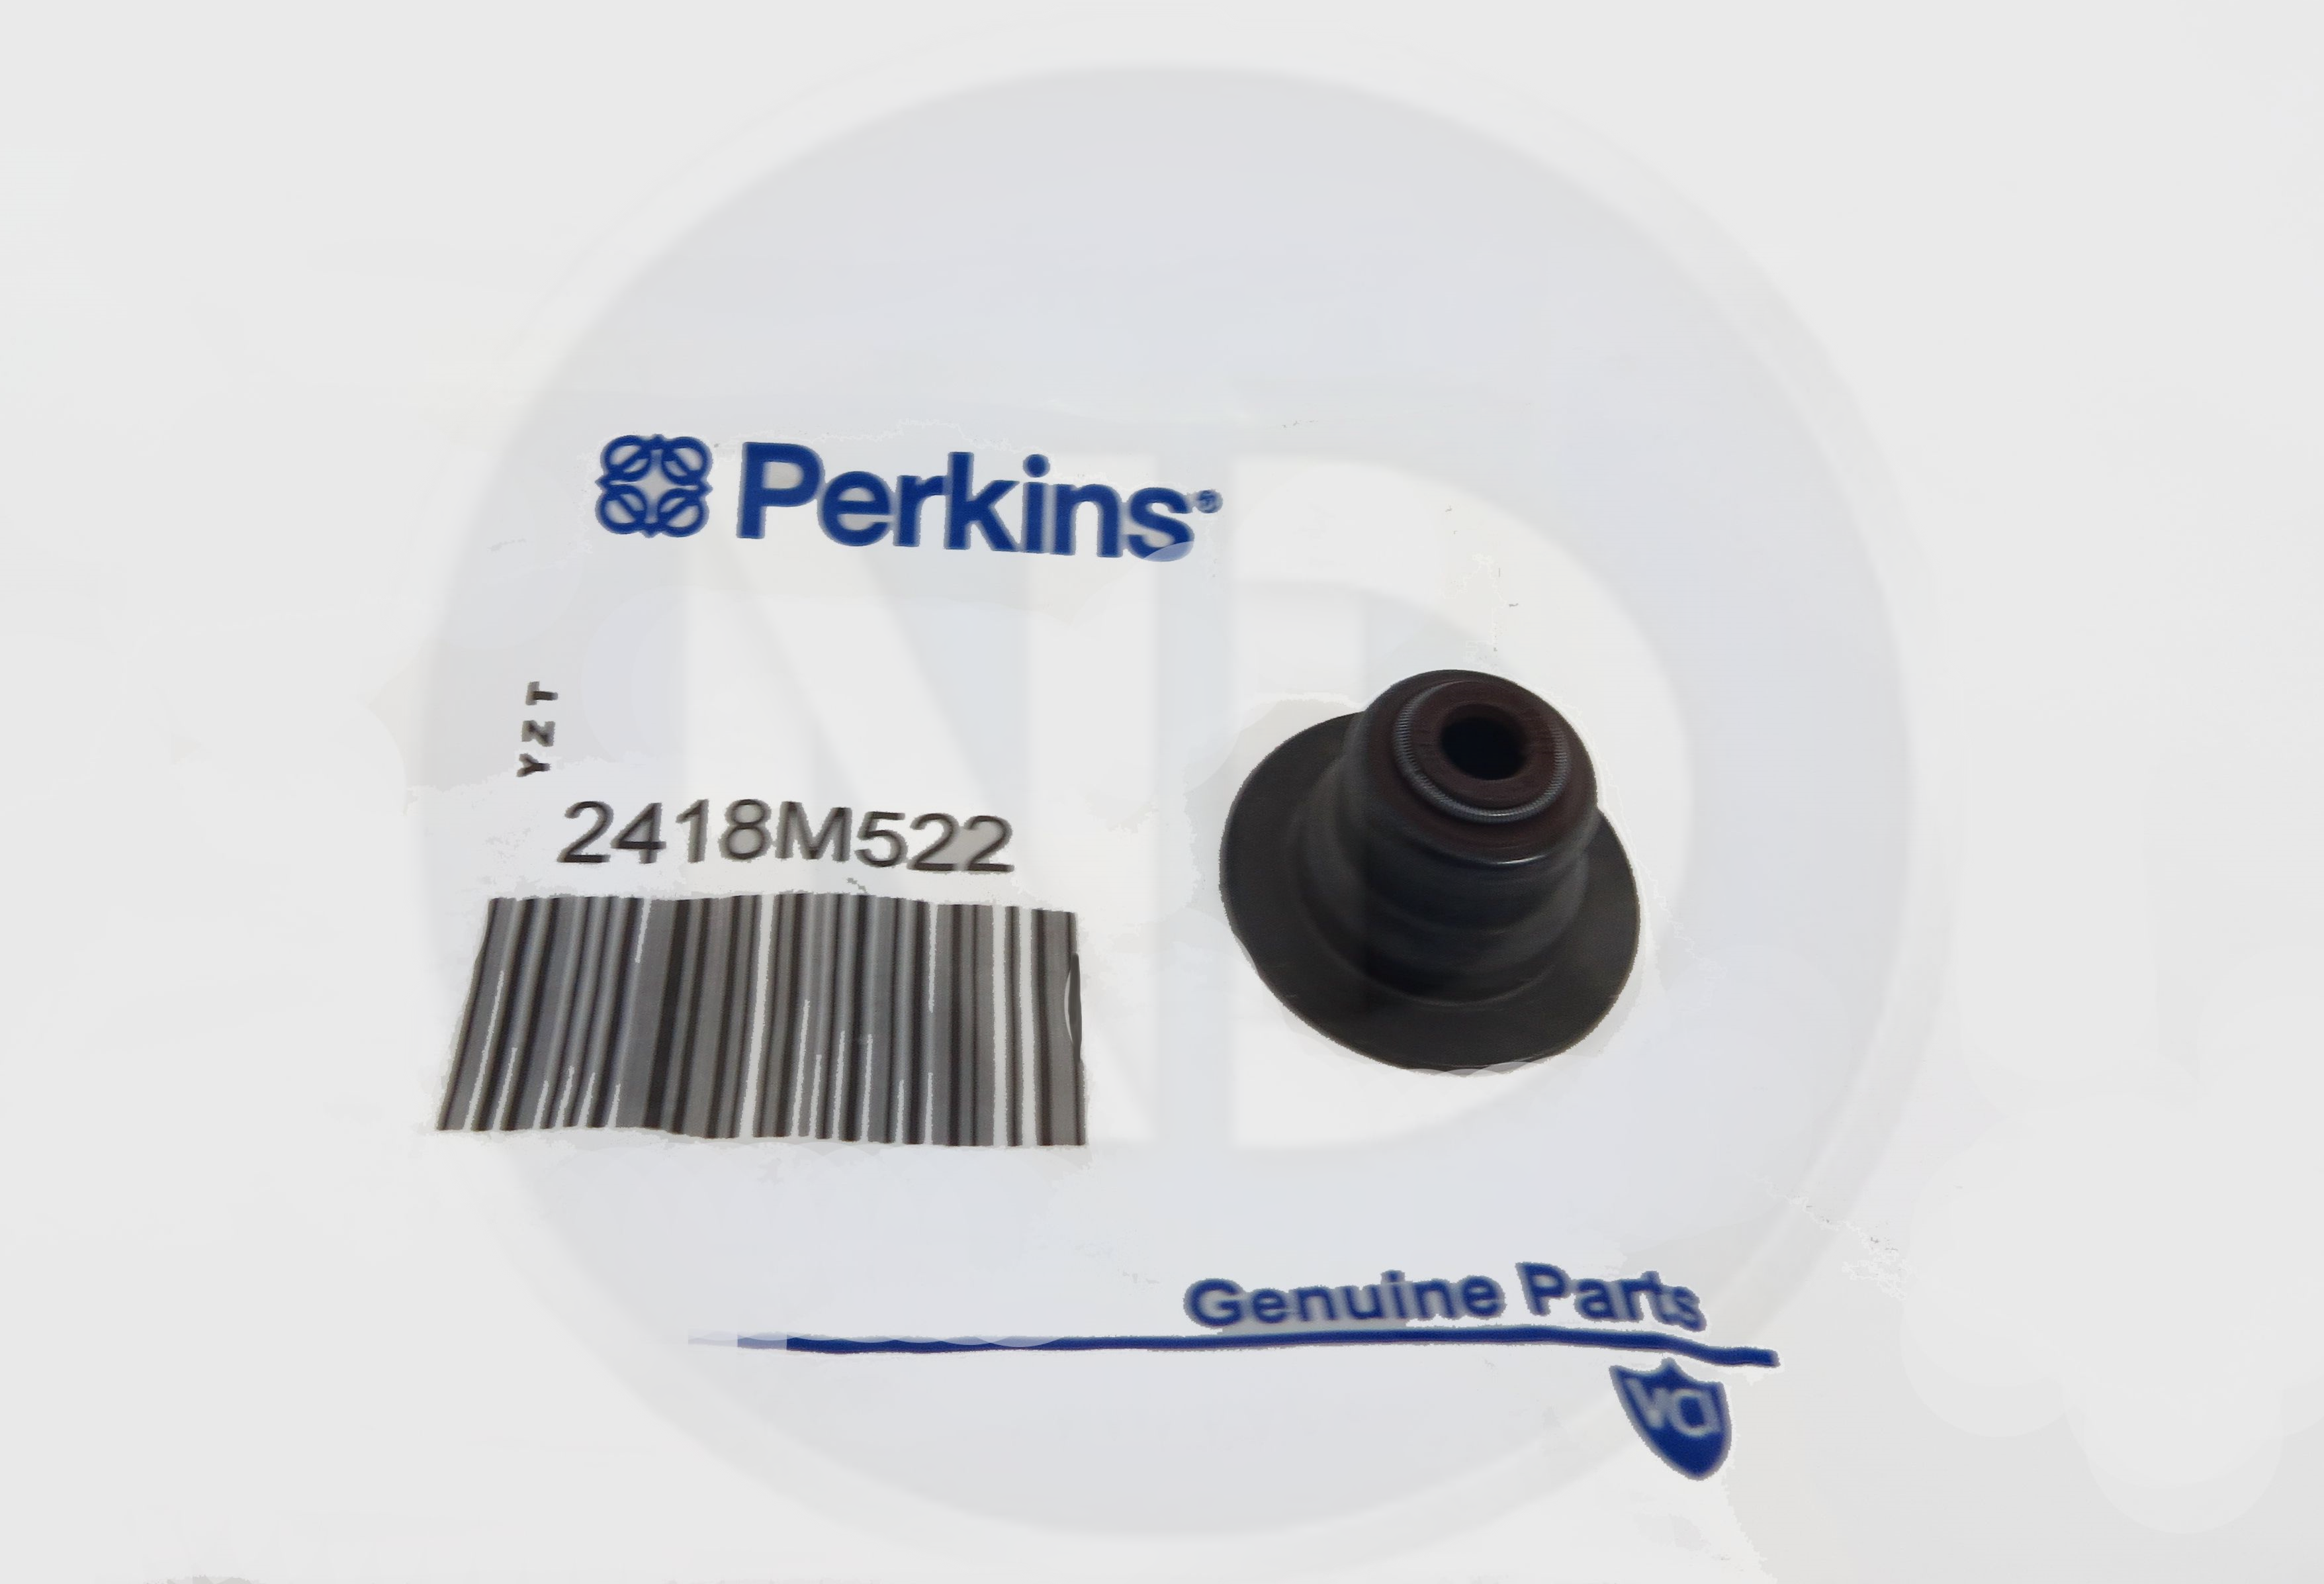 2418M522 Perkins Value Stem Seal 1106